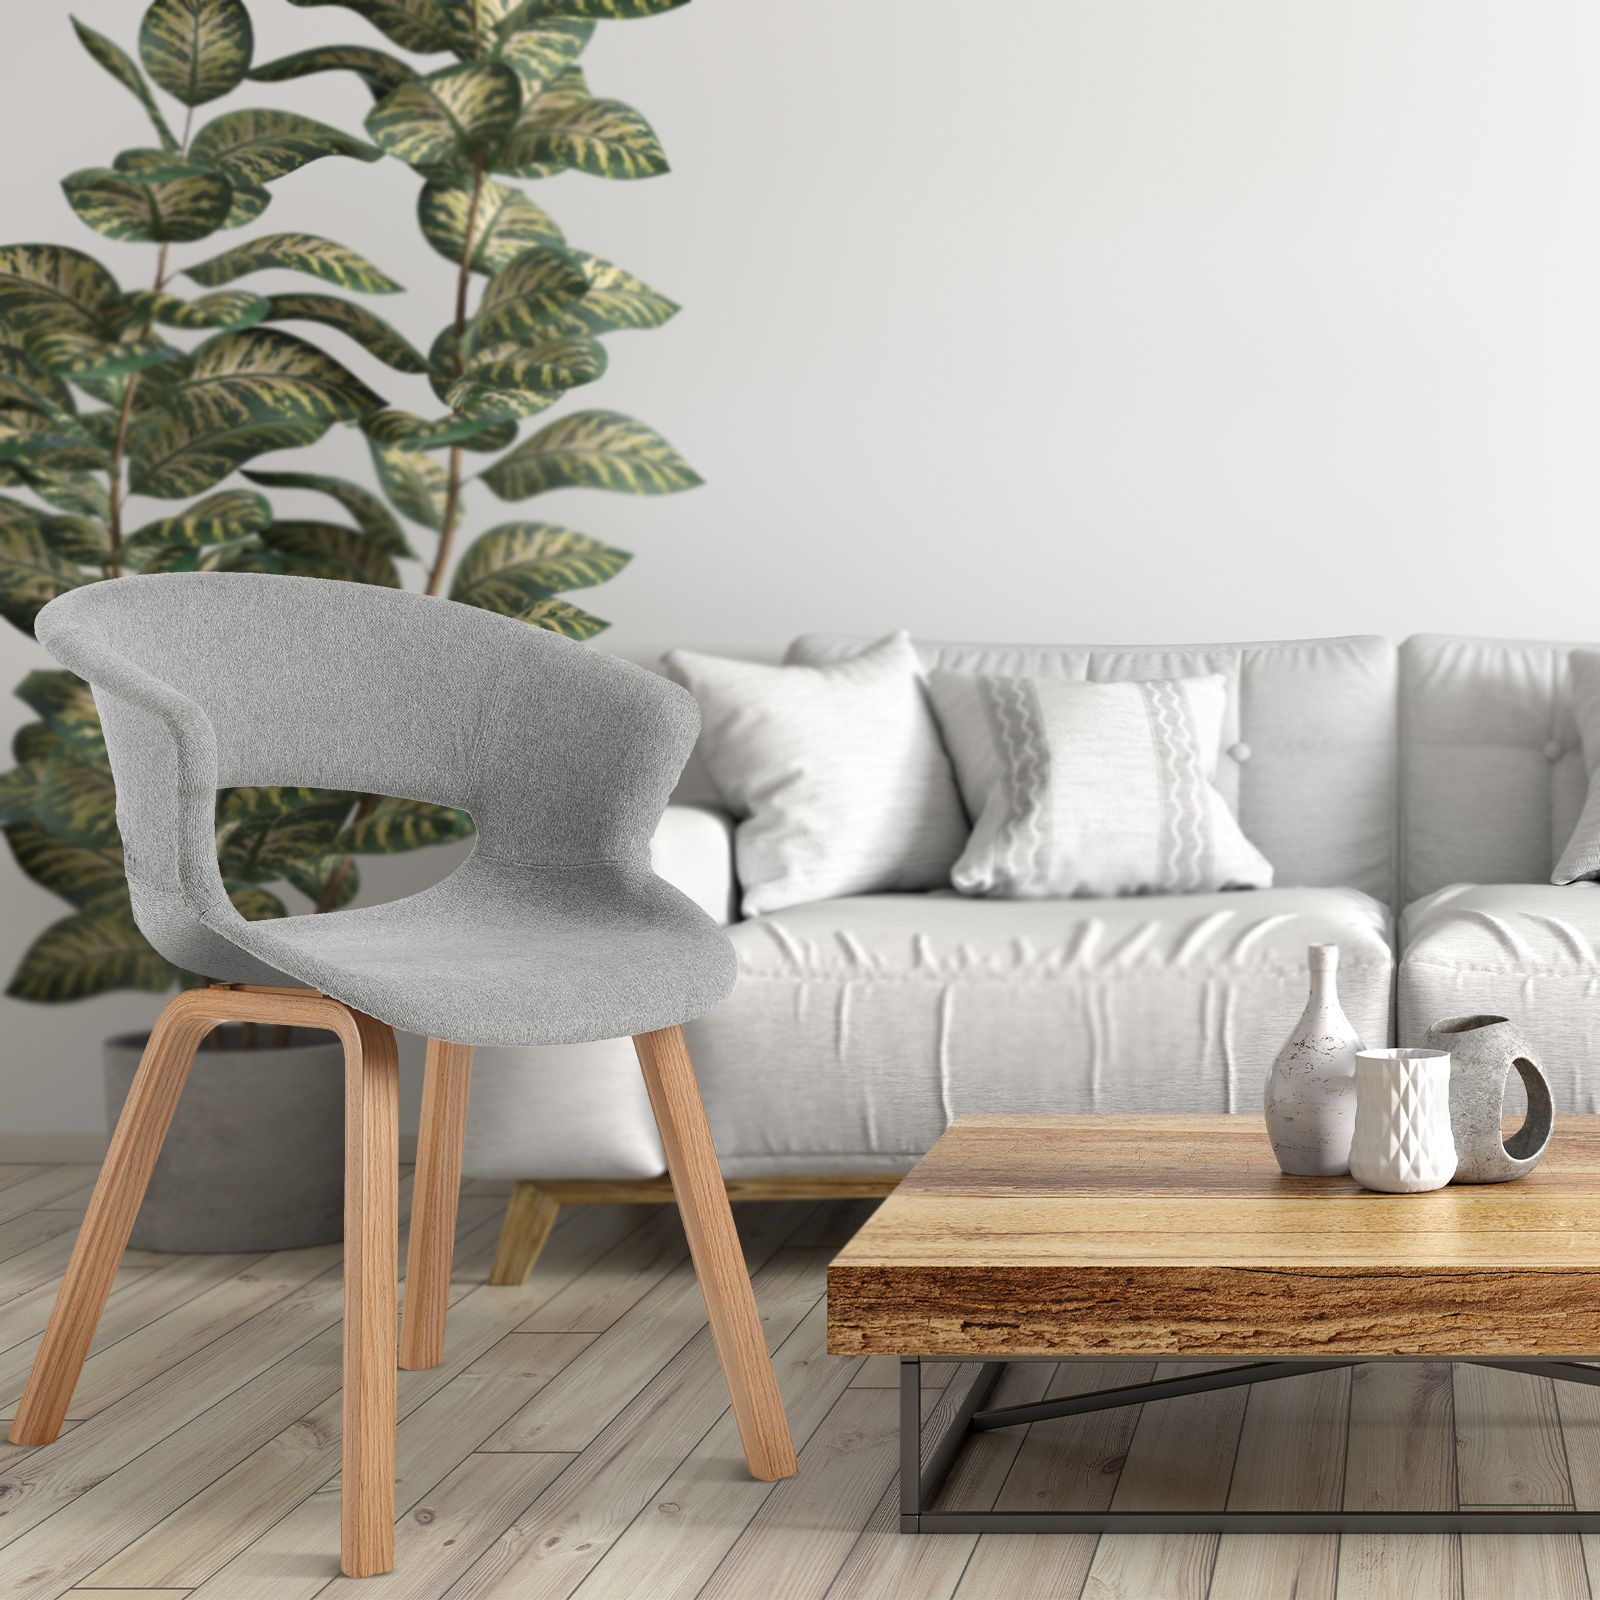 JOAK | Silla de madera de fresno natural y tapizado color gris (61,5 x 56,5 x 76,9 cm)